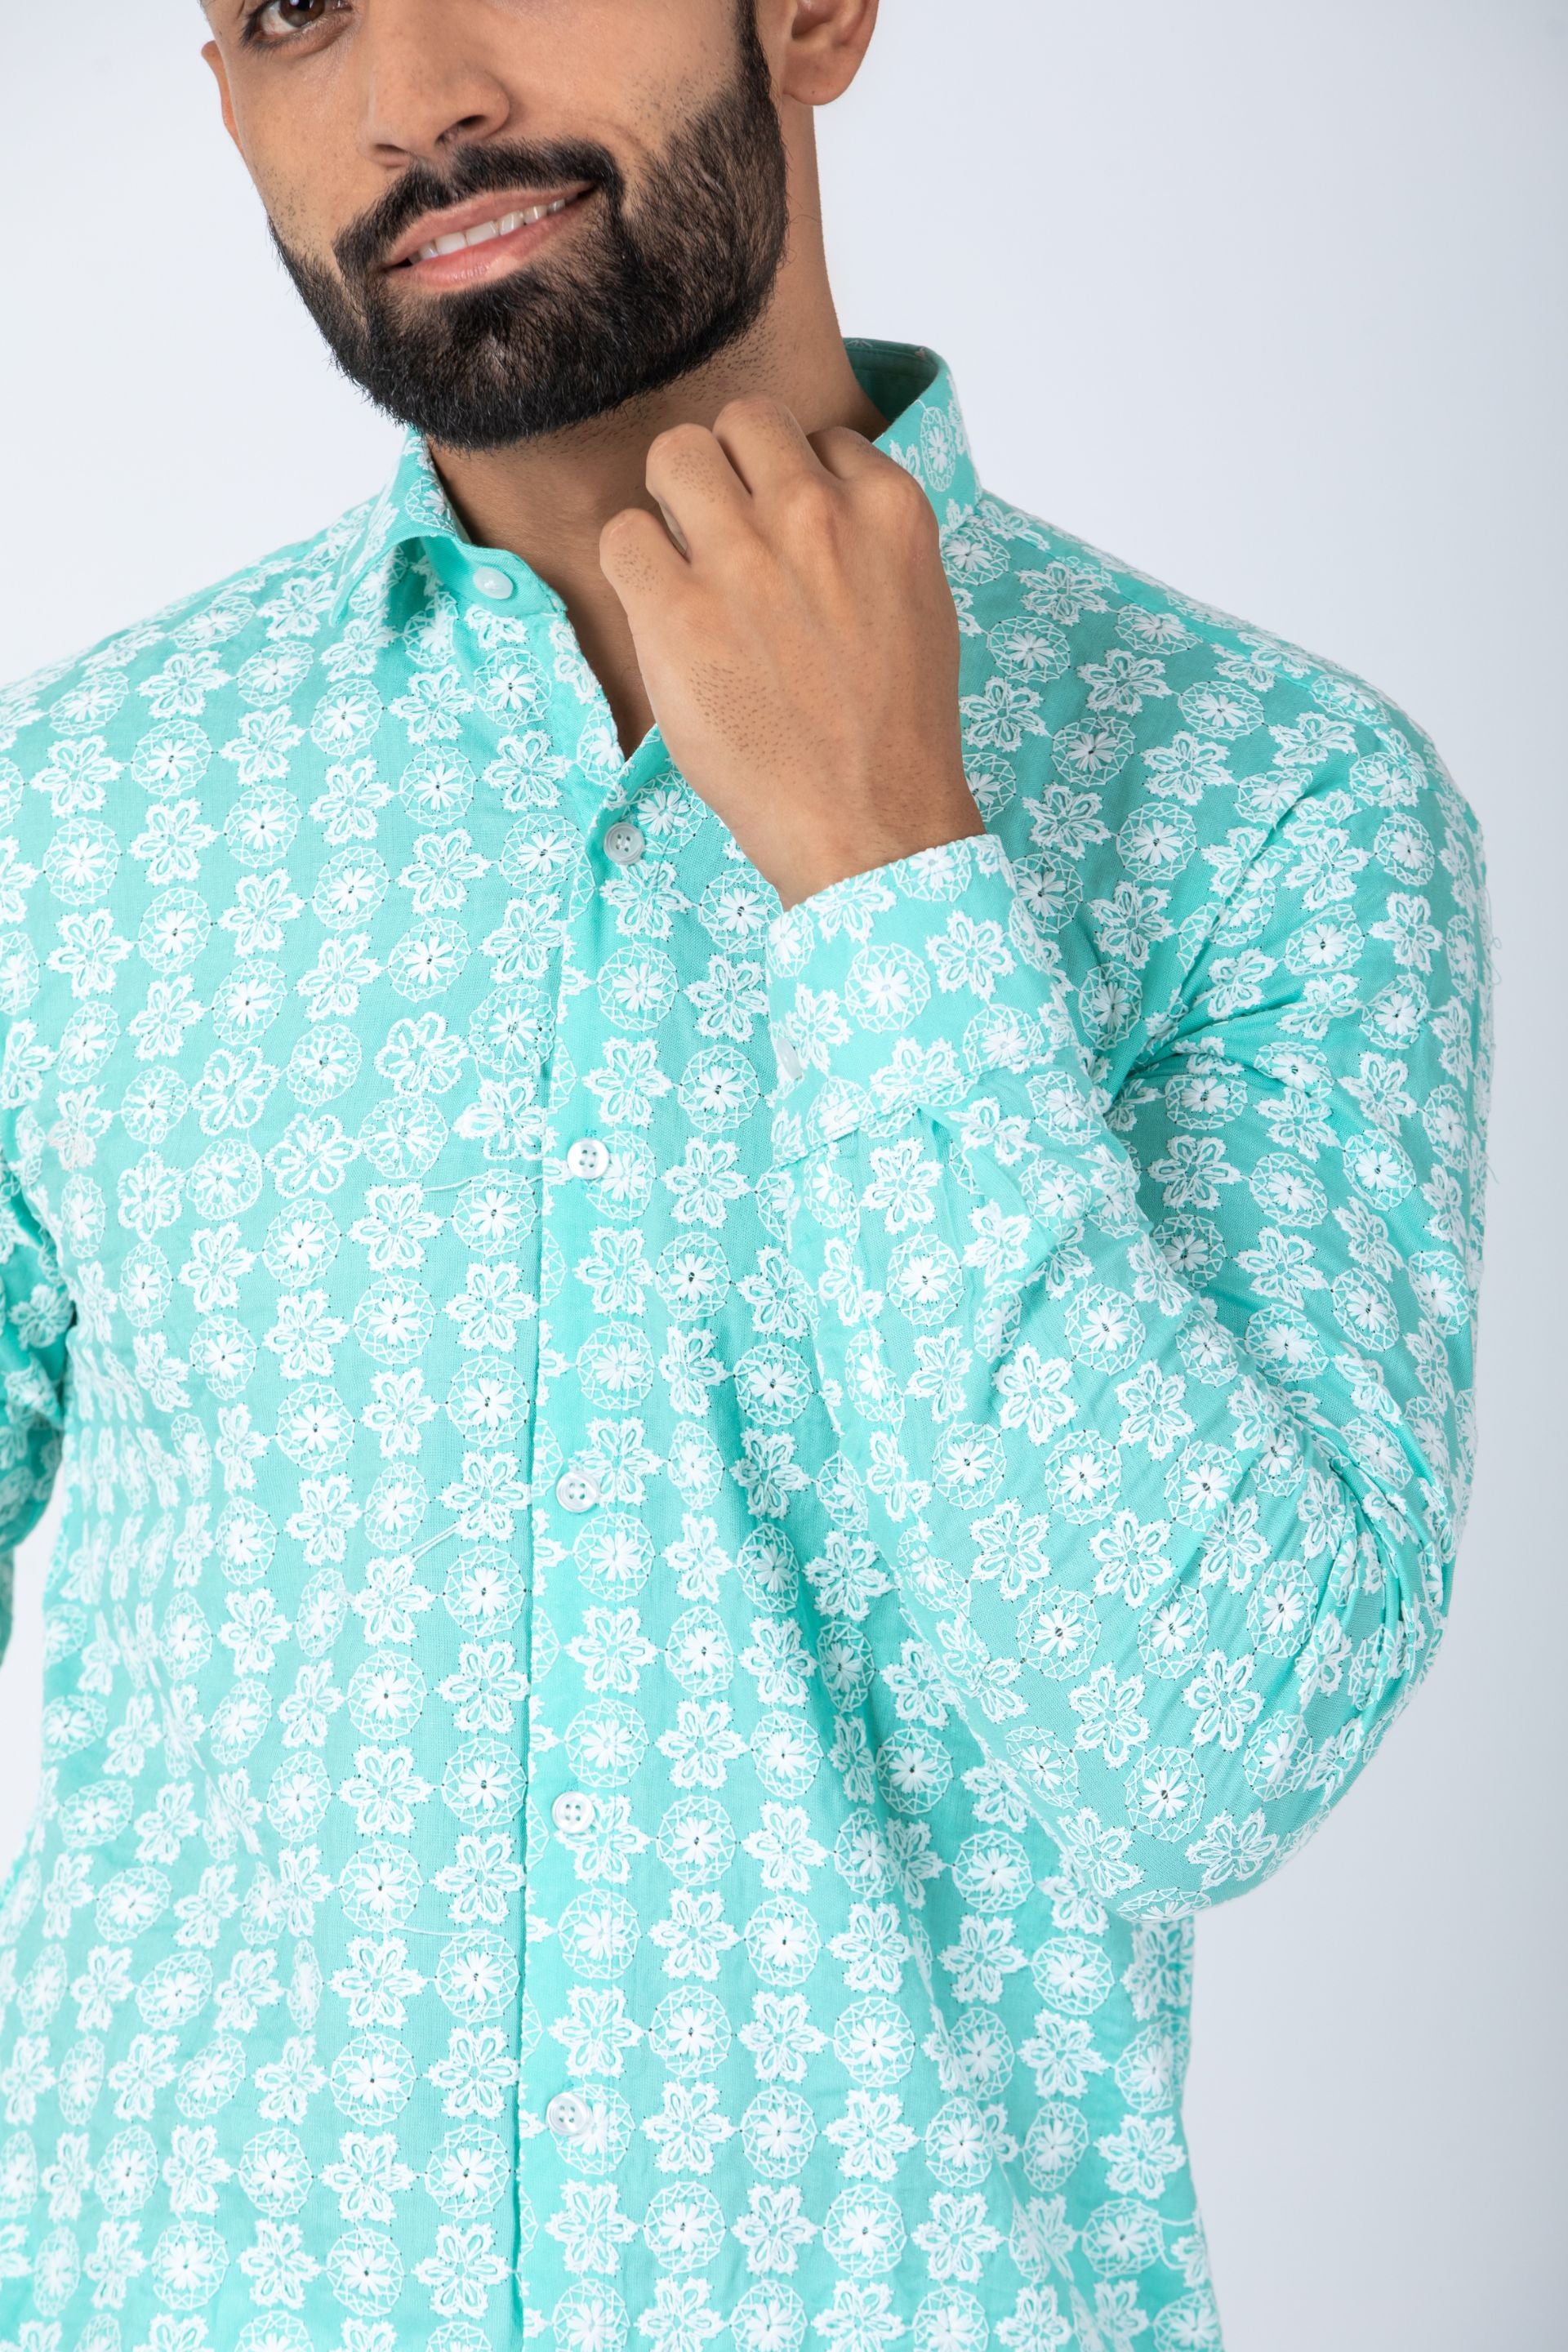 Firangi Yarn Super Soft Full Sleeves Chikankari schiffli Embroided Men's Shirt